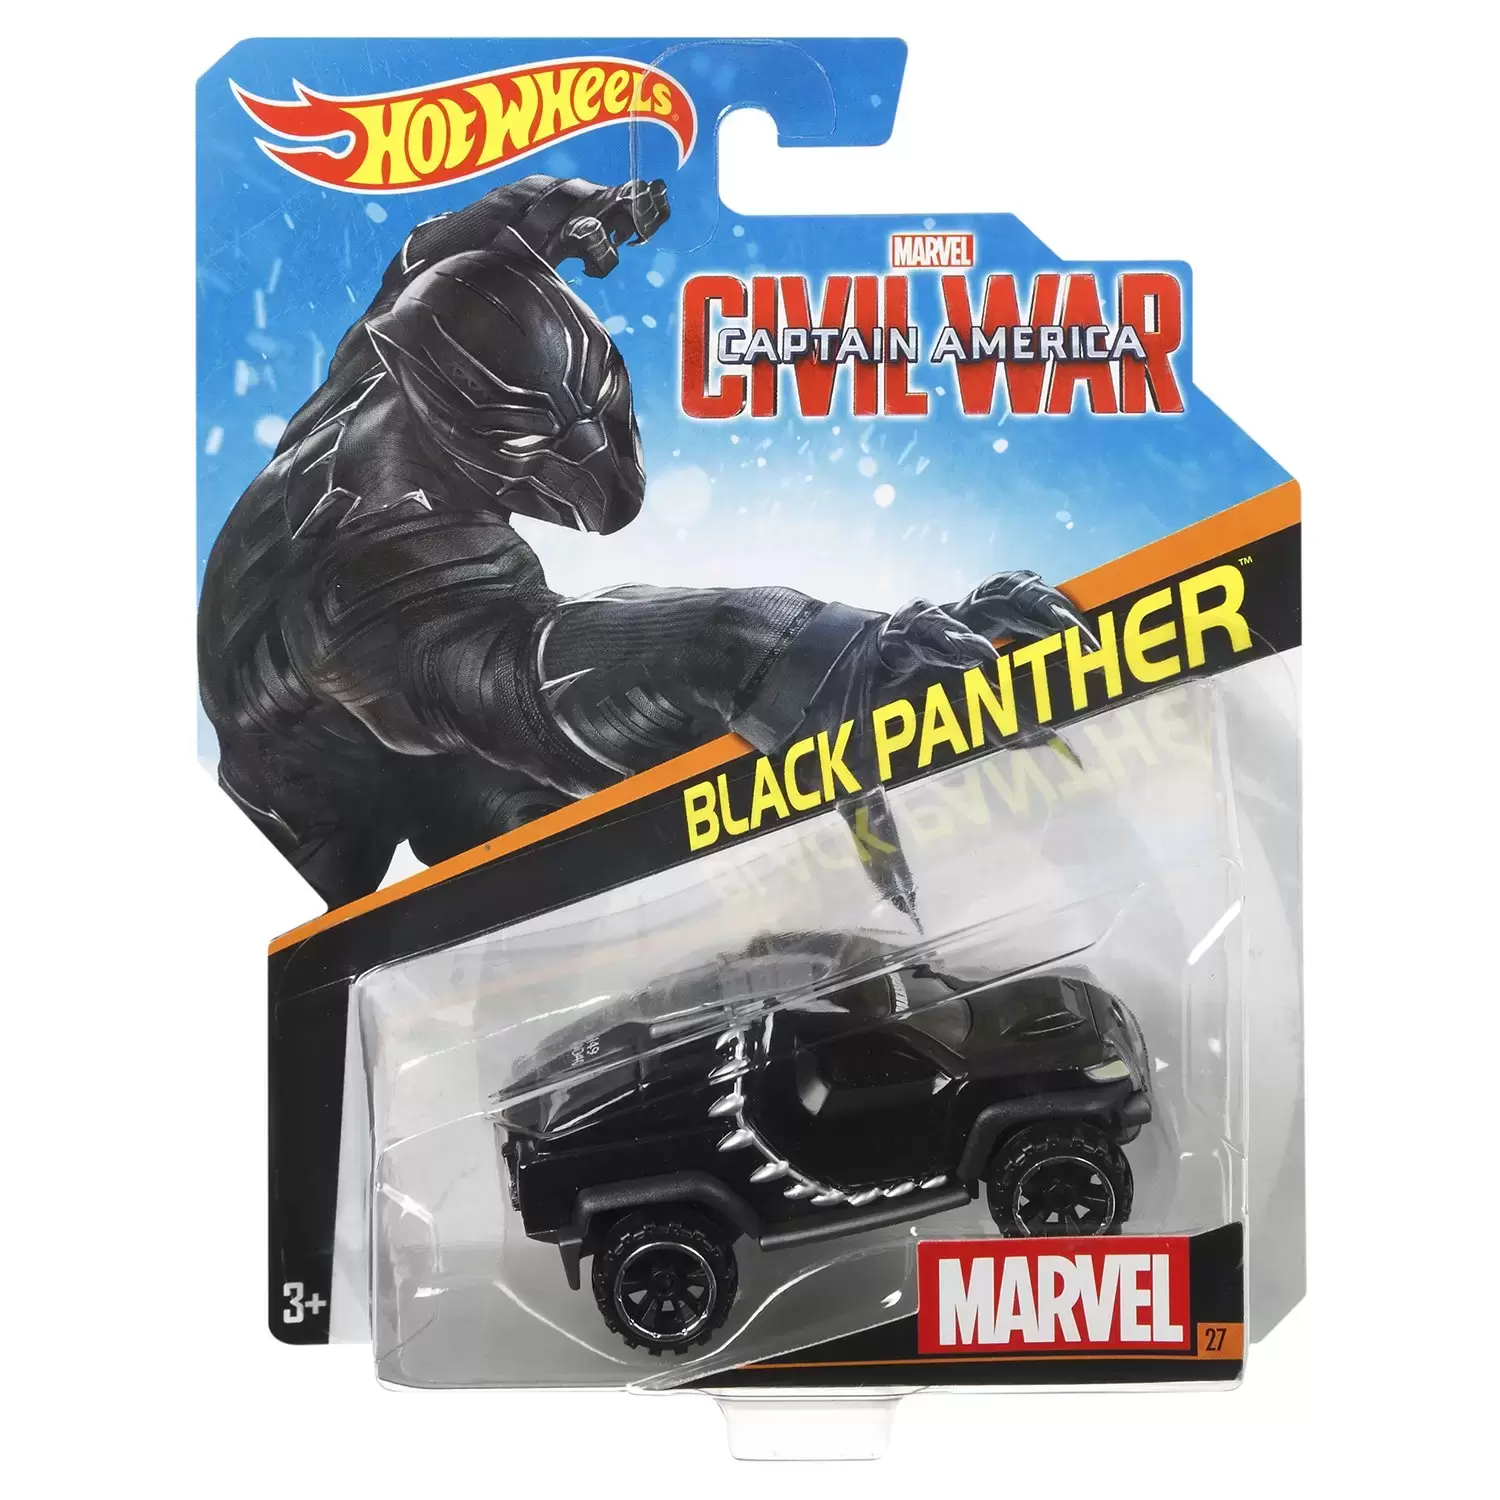 Marvel Character Cars - Civil War - Black Panther